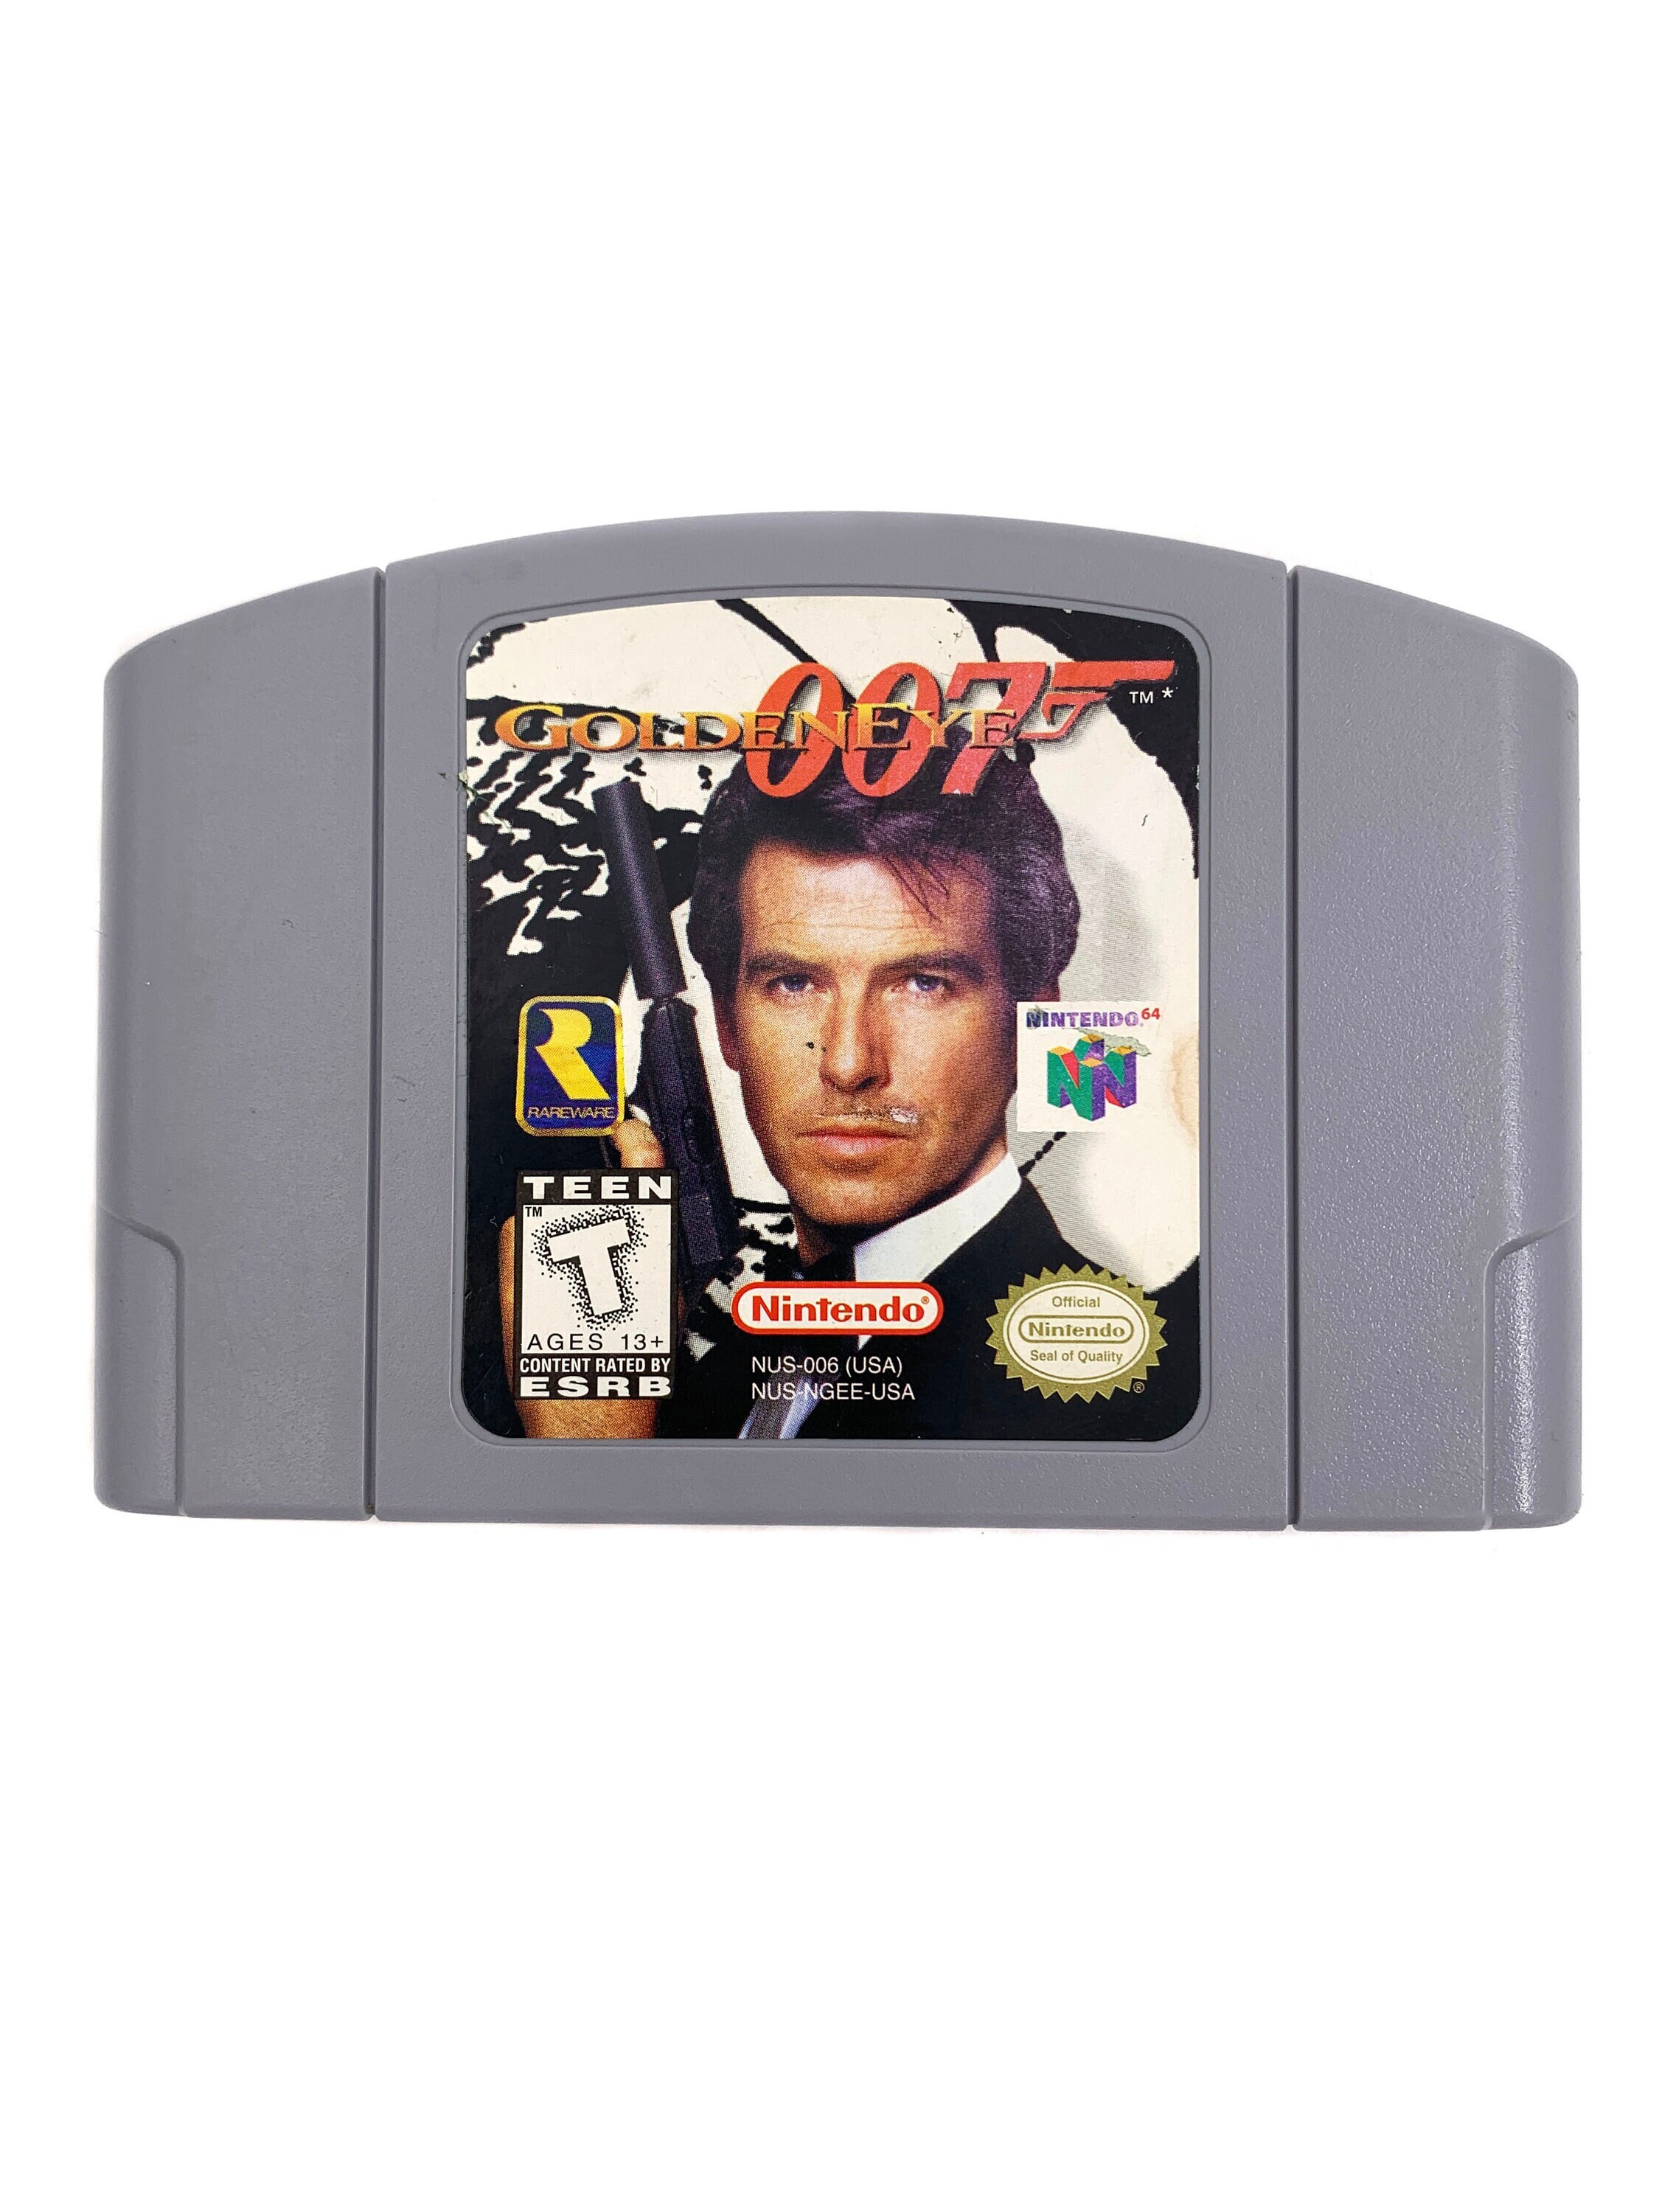 GoldenEye 007 [USA] - Nintendo 64 (N64) rom download